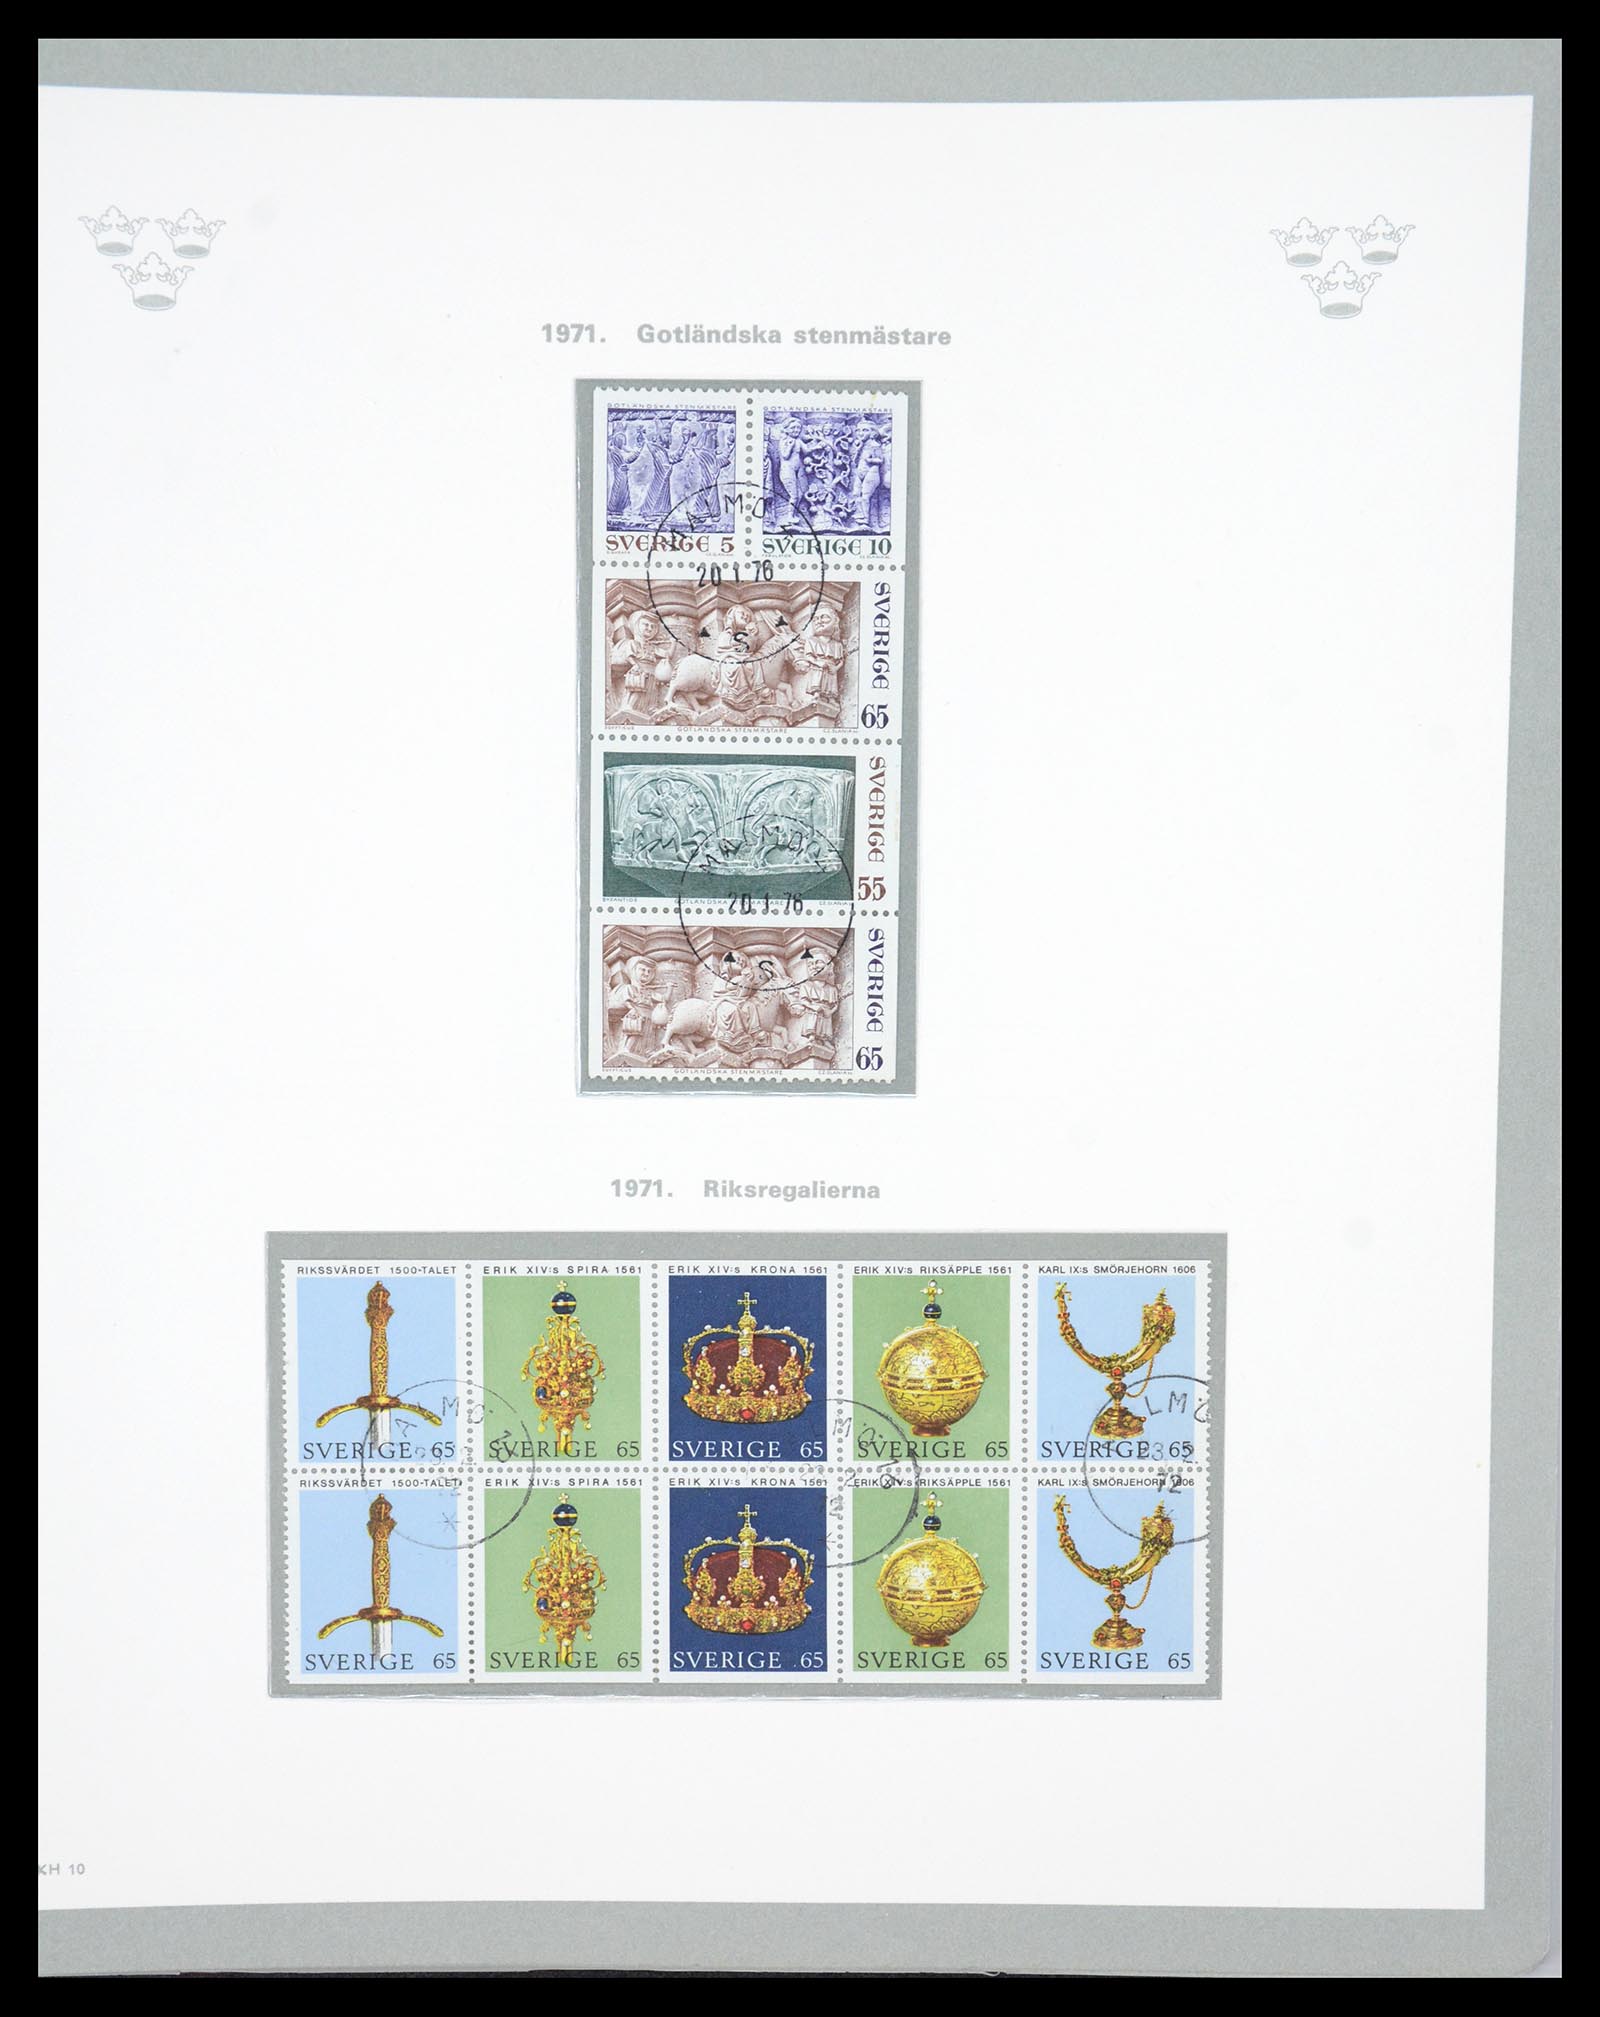 36579 122 - Stamp collection 36579 Zweden complete verzameling 1855-1975.